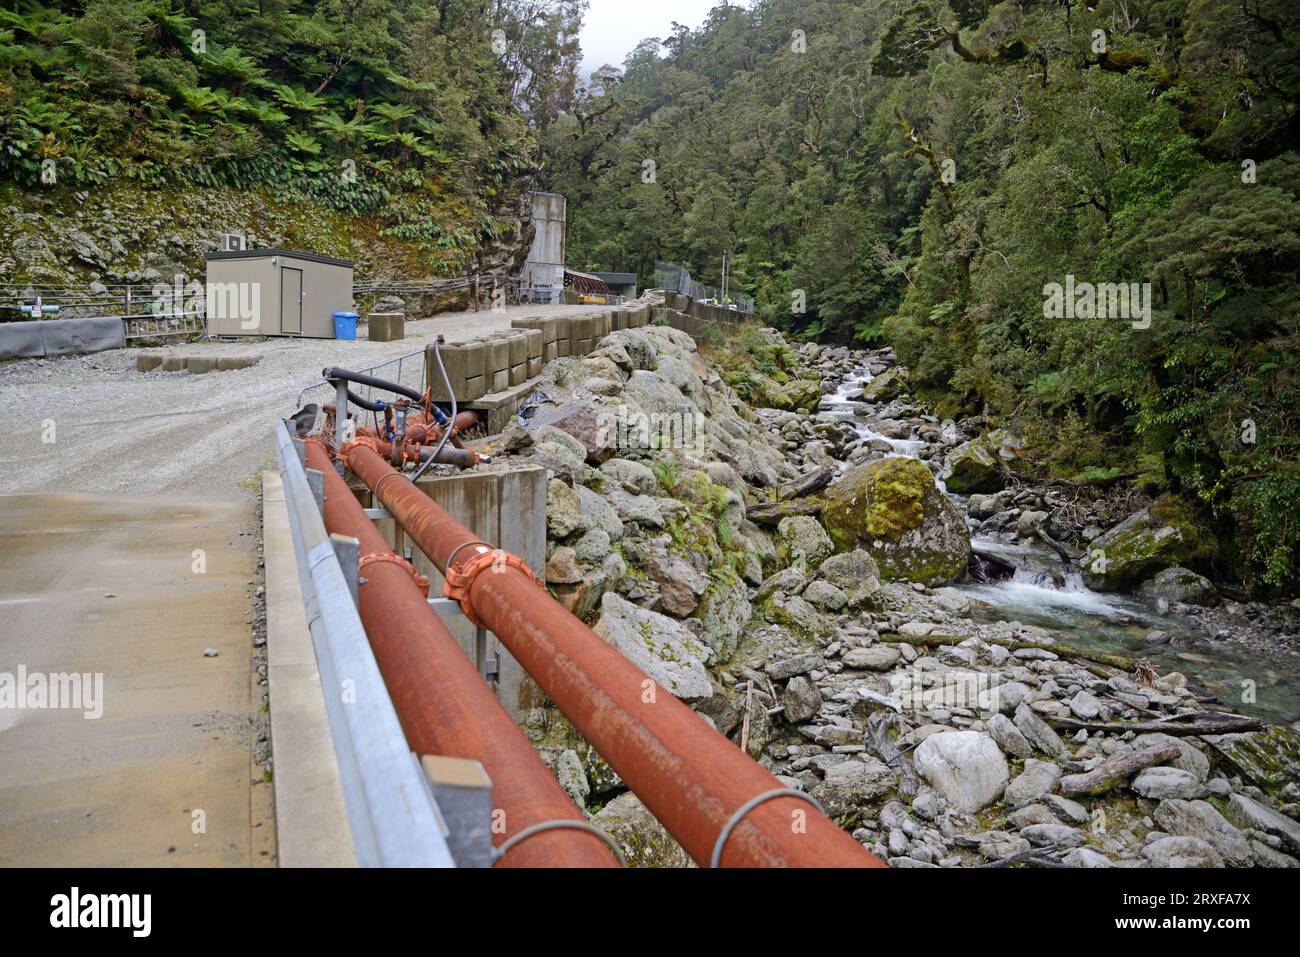 GREYMOUTH, NEUSEELAND, 20. MAI 2015: Der Pike River fließt am 20. Mai 2015 in der Nähe von Greymouth, Neuseeland, am Eingang zur Pike River Coal Mine vorbei. 29 Mine Stockfoto